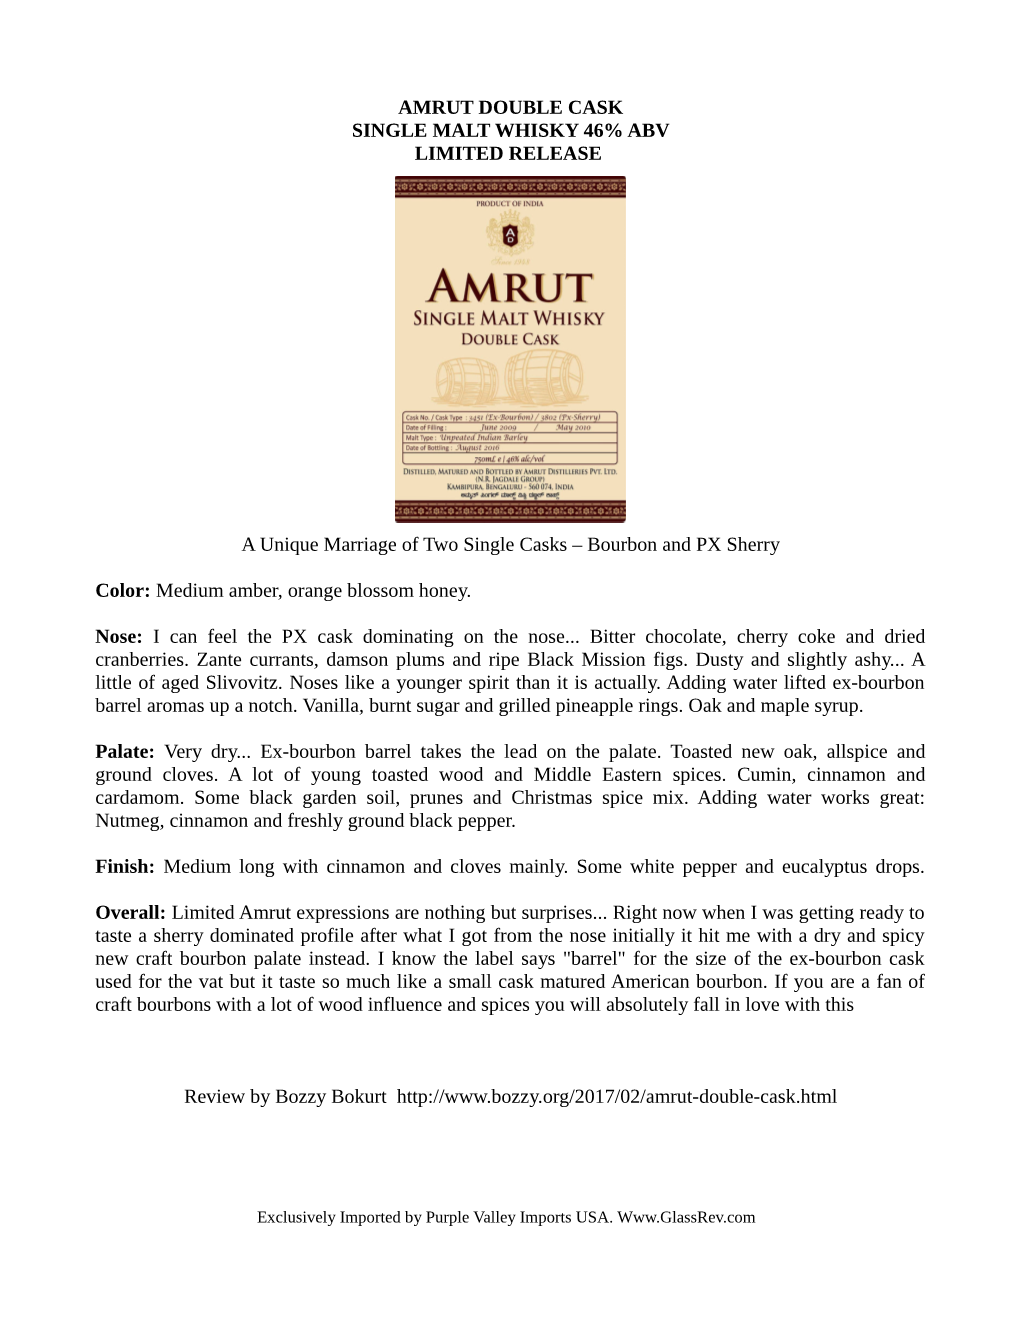 Amrut Double Cask Single Malt Whisky 46% Abv Limited Release